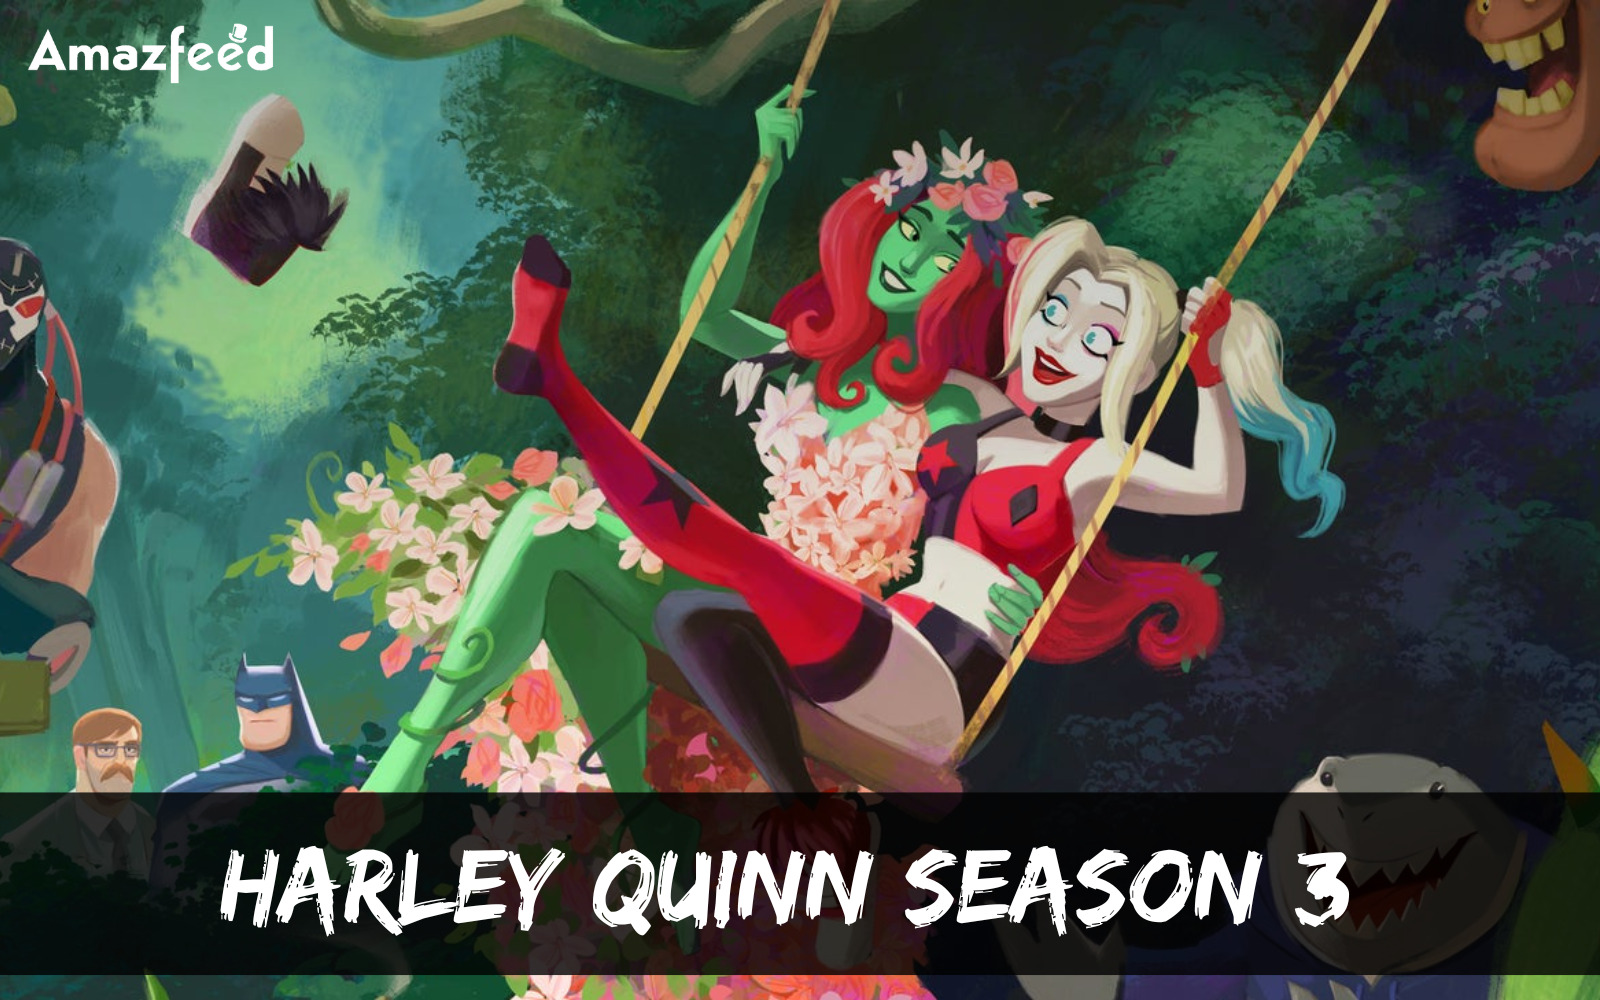 Is Harley Quinn Season 3 the last season of the series